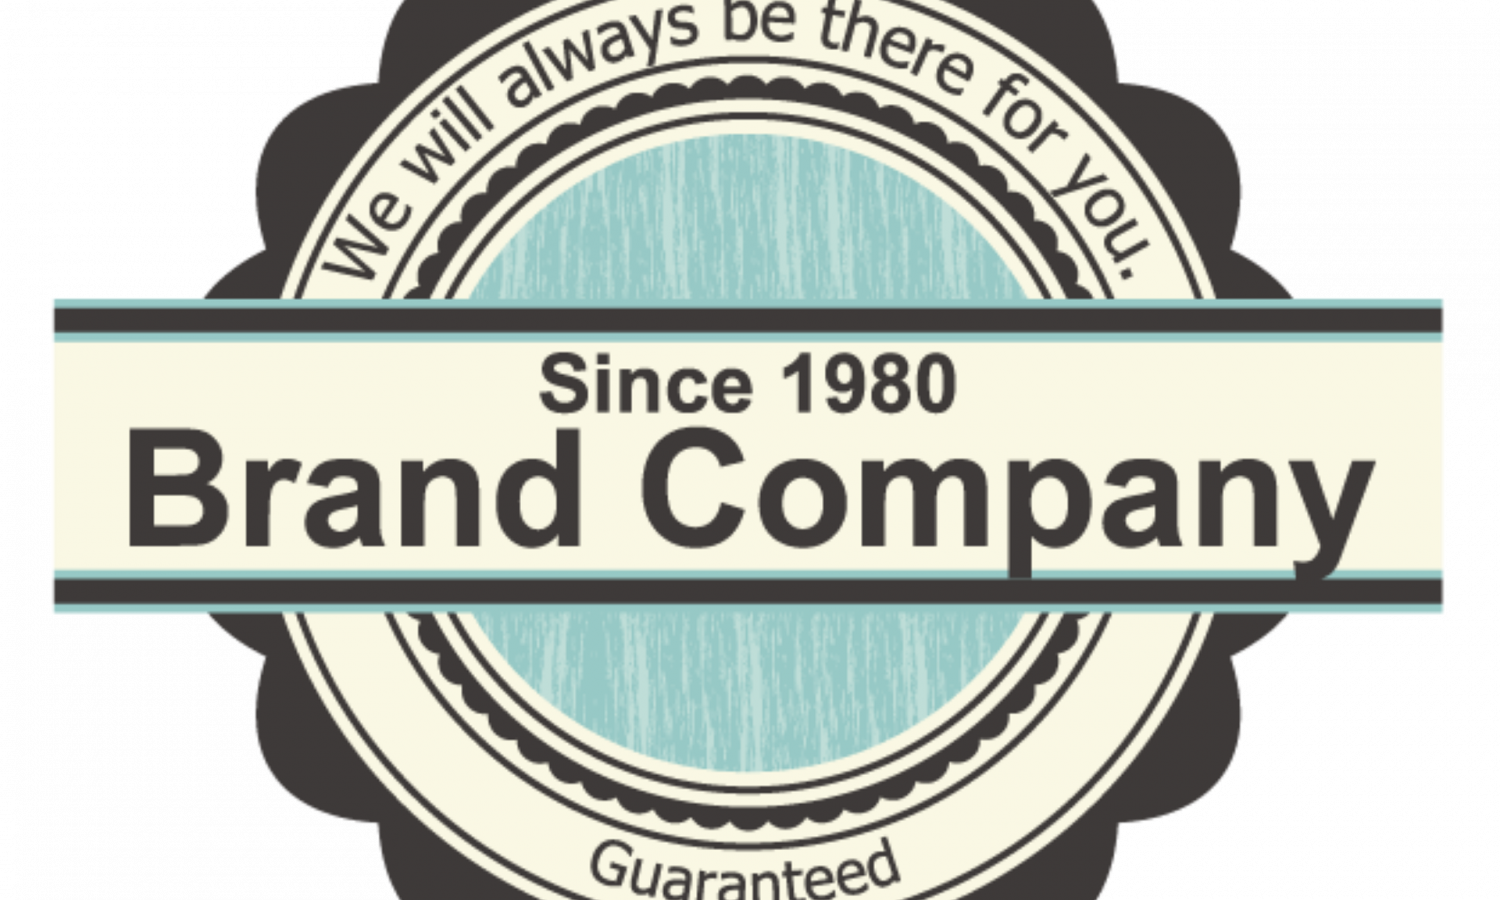 Brand Company